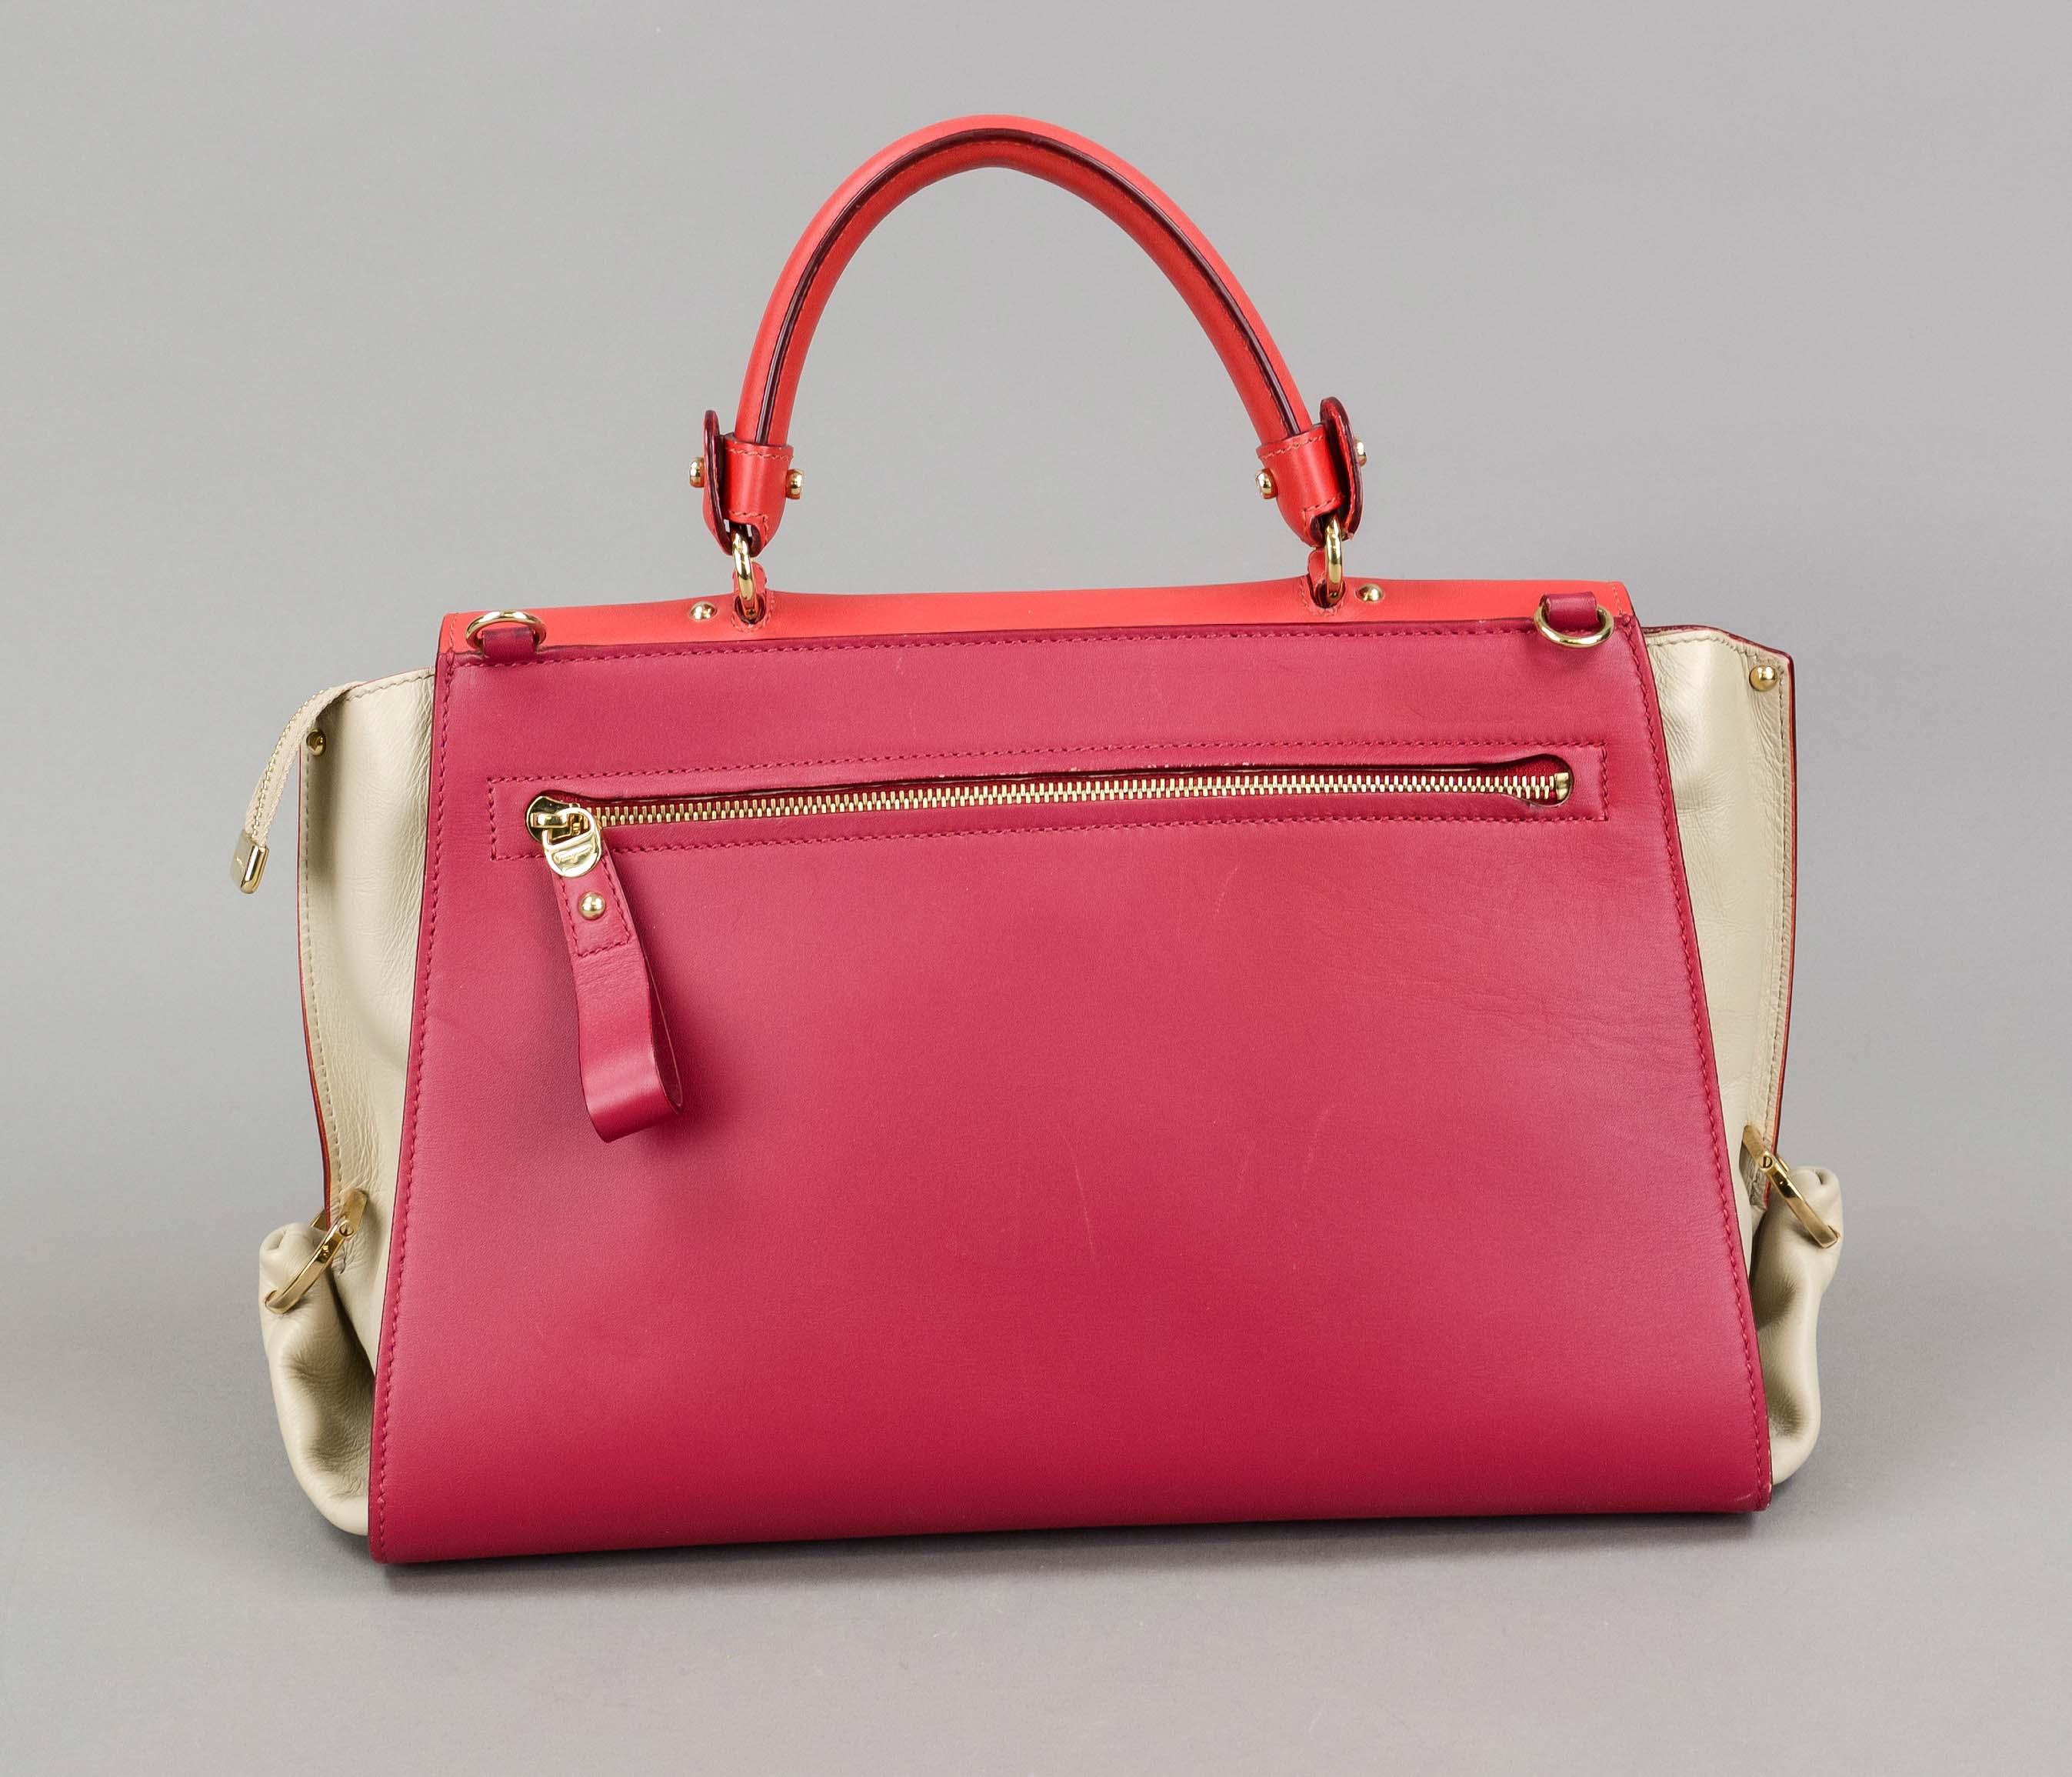 Salvatore Ferragamo, Multicolor Leather Sofia Top Handle Bag, orange-red, burgundy and sand- - Image 2 of 2